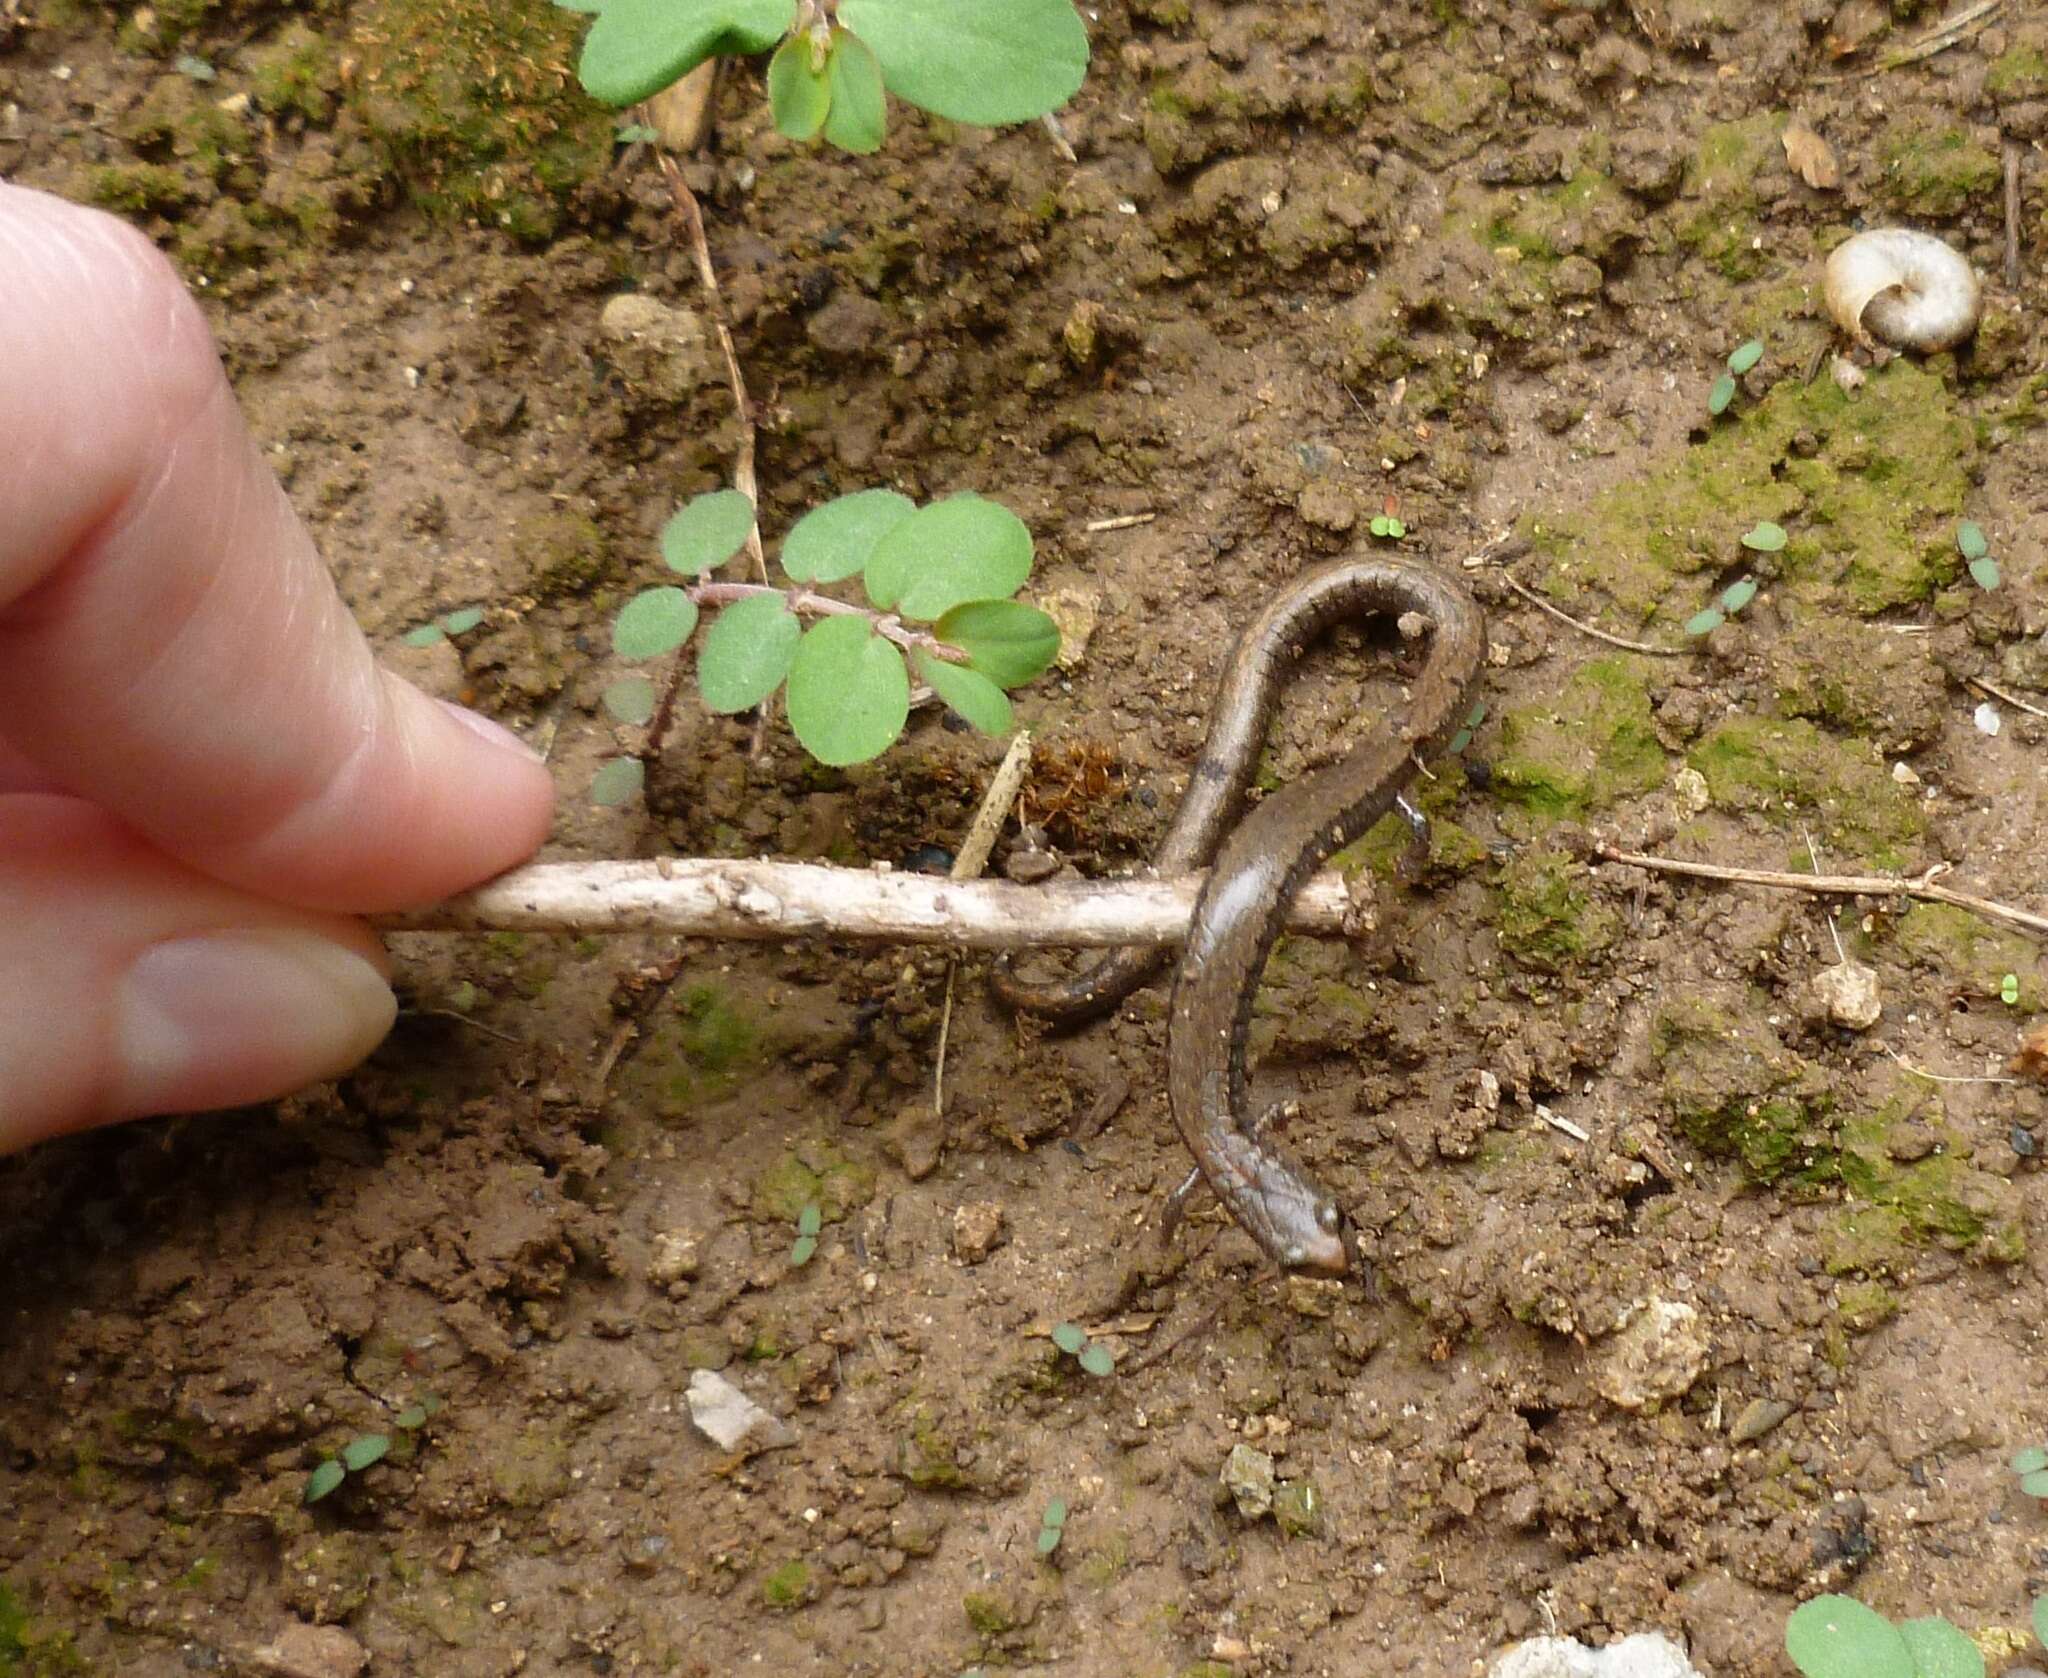 Image of Gregarious Slender Salamander